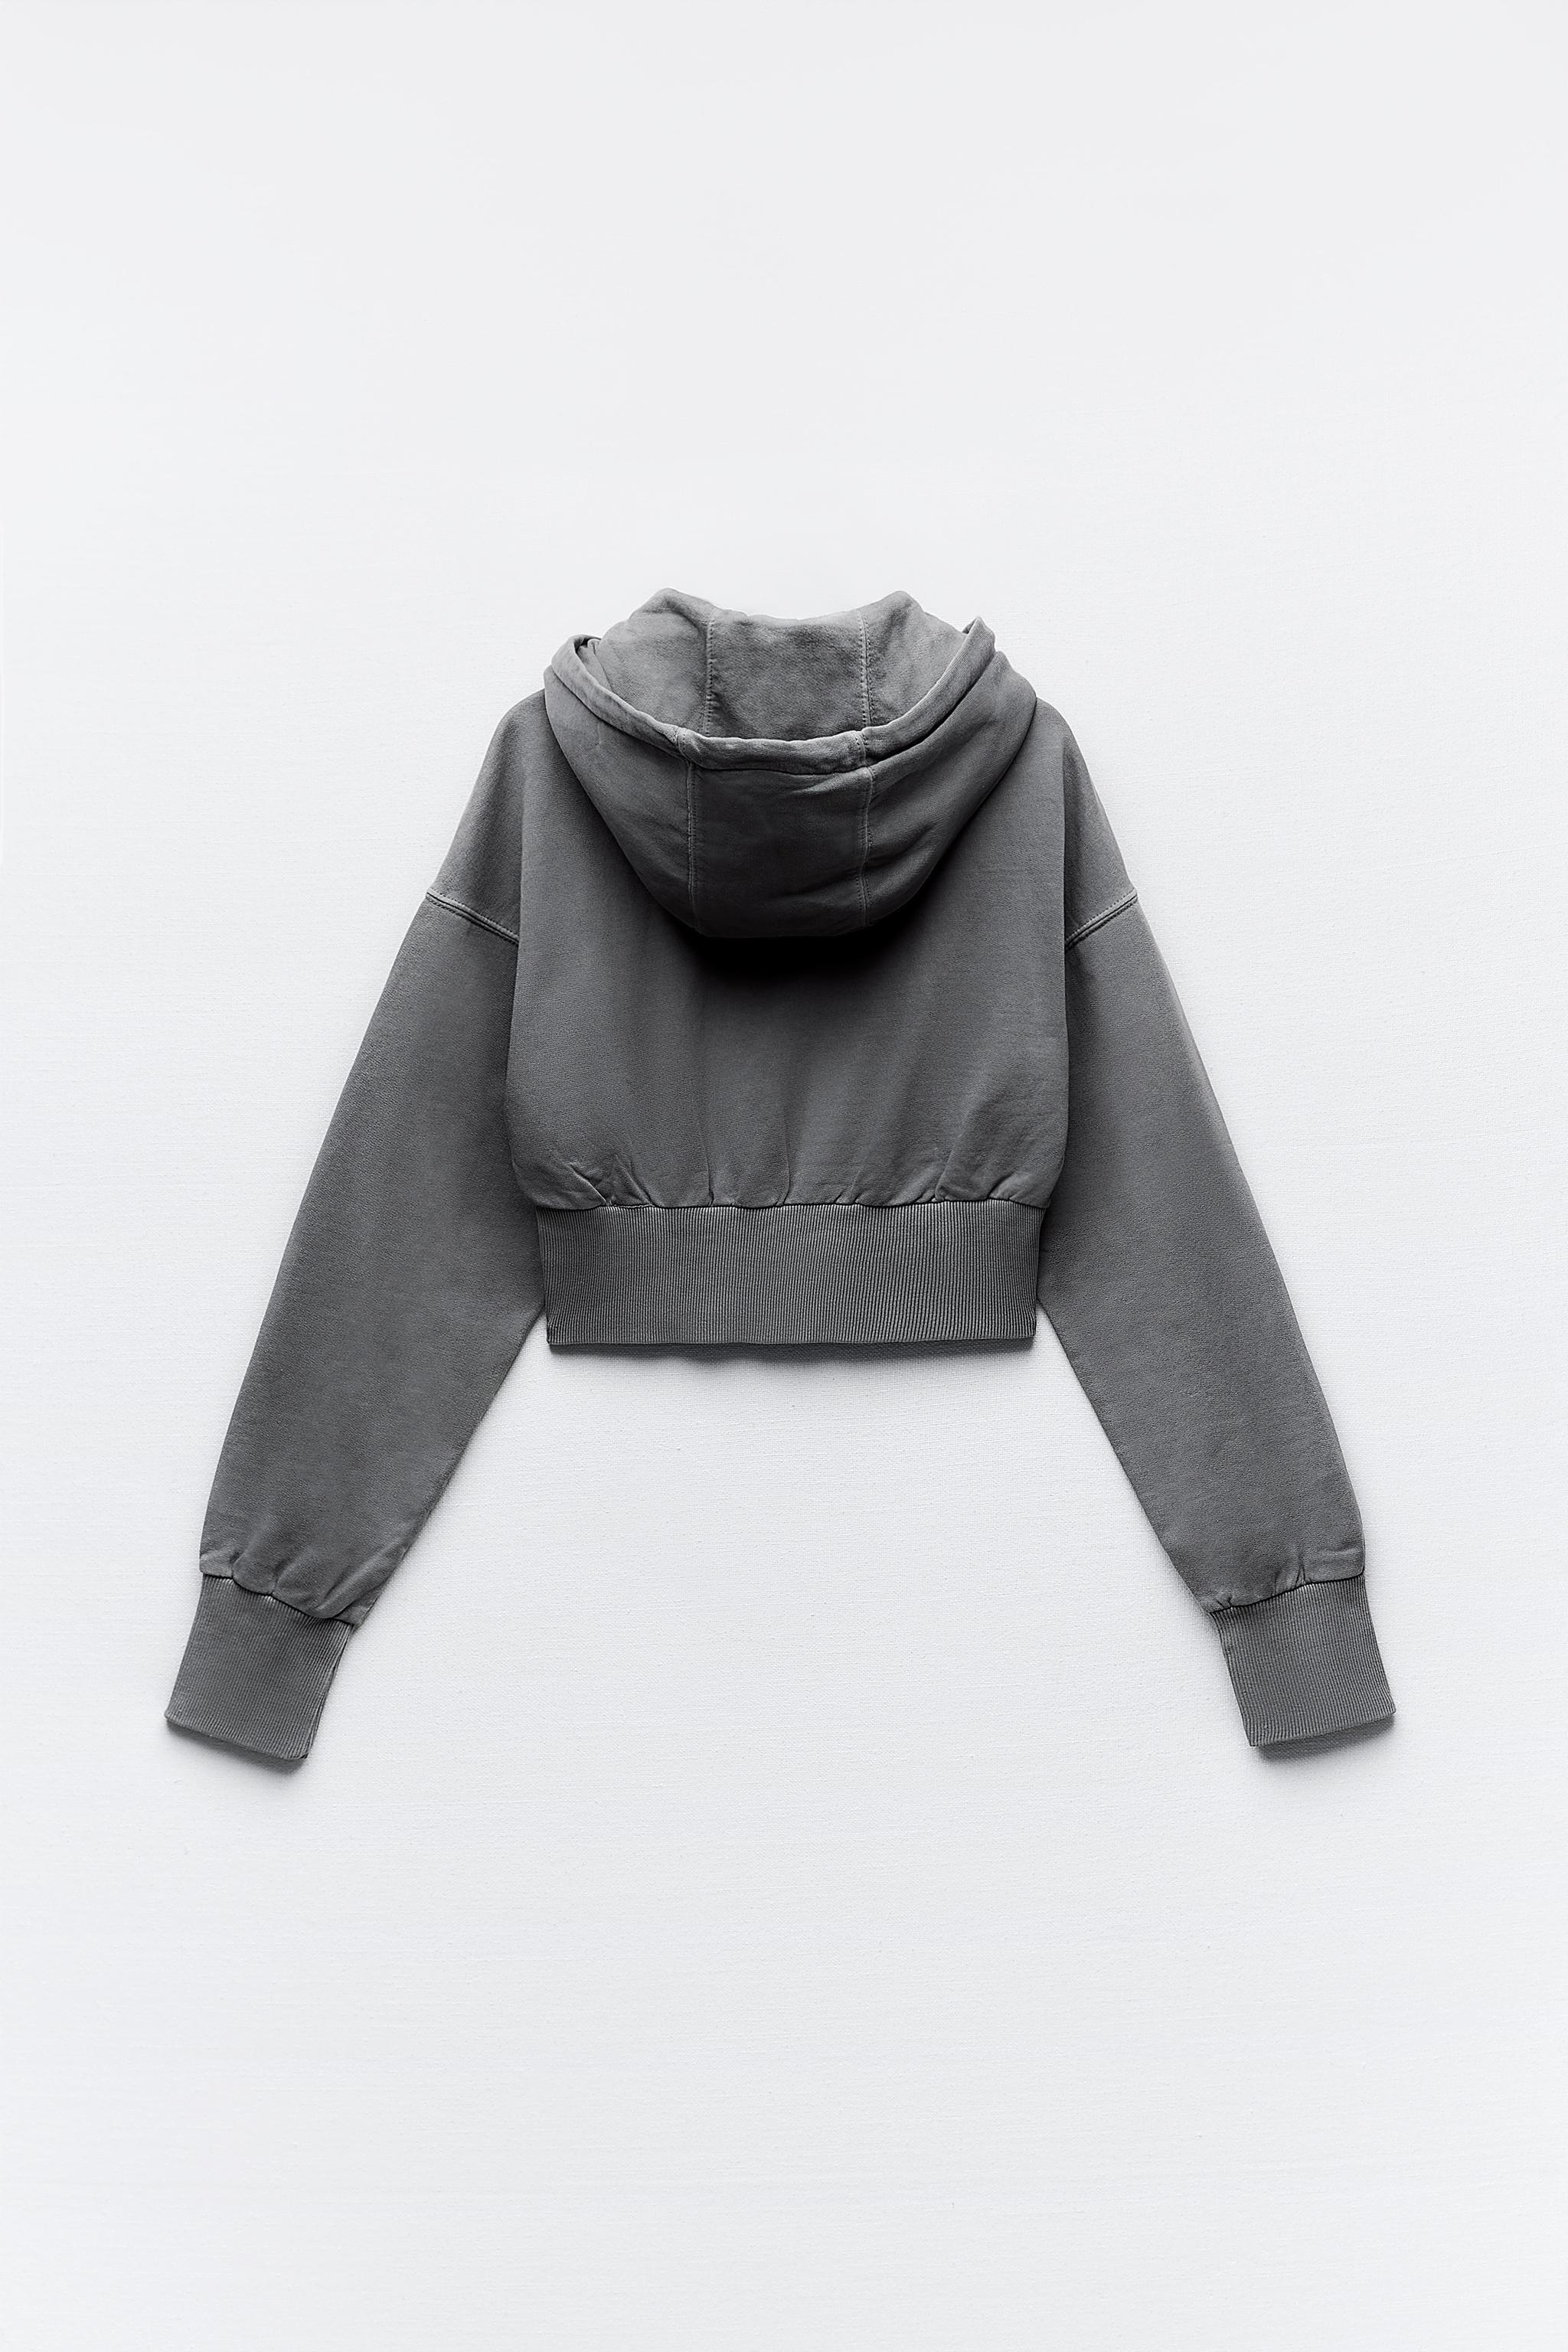 Sweatshirt with adjustable drawstring hood. Long sleeves with 